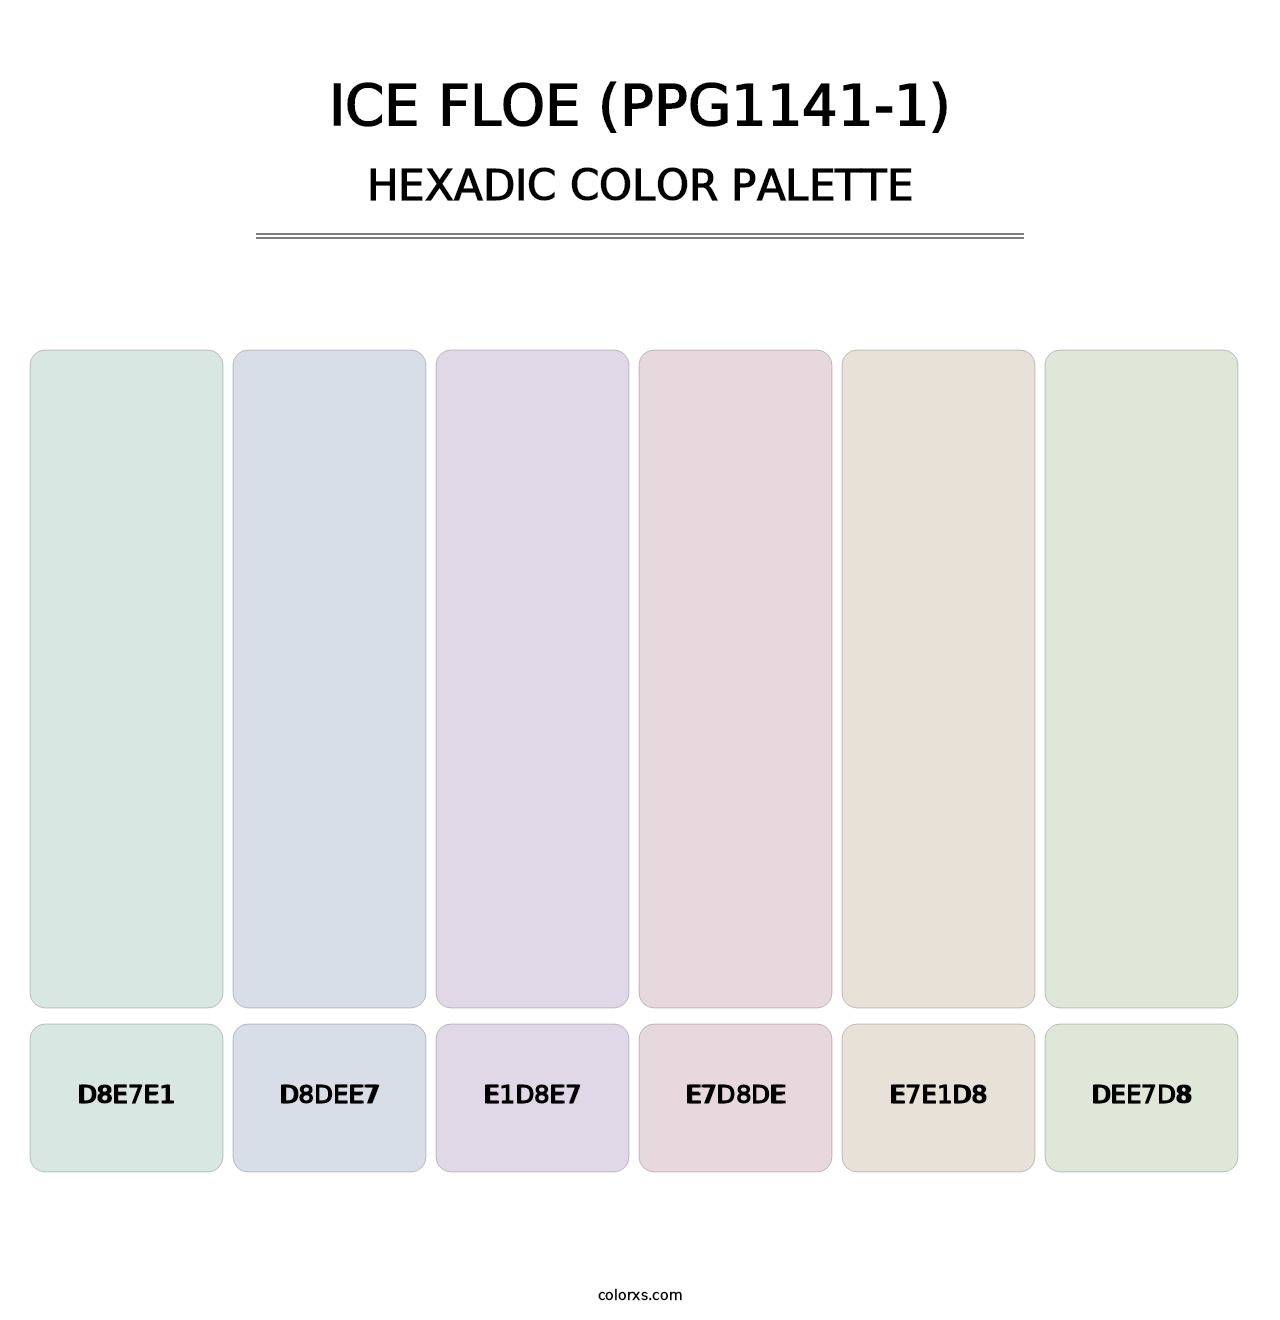 Ice Floe (PPG1141-1) - Hexadic Color Palette